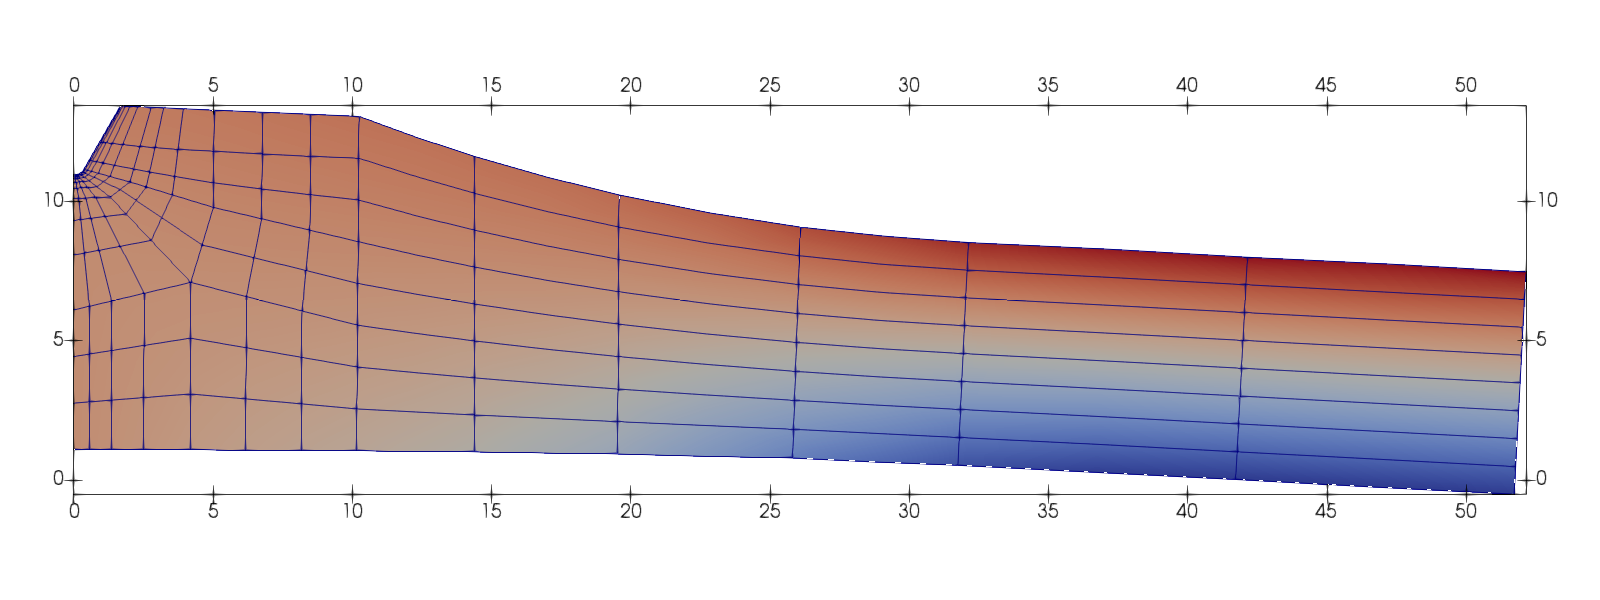 horizontal displacement plot